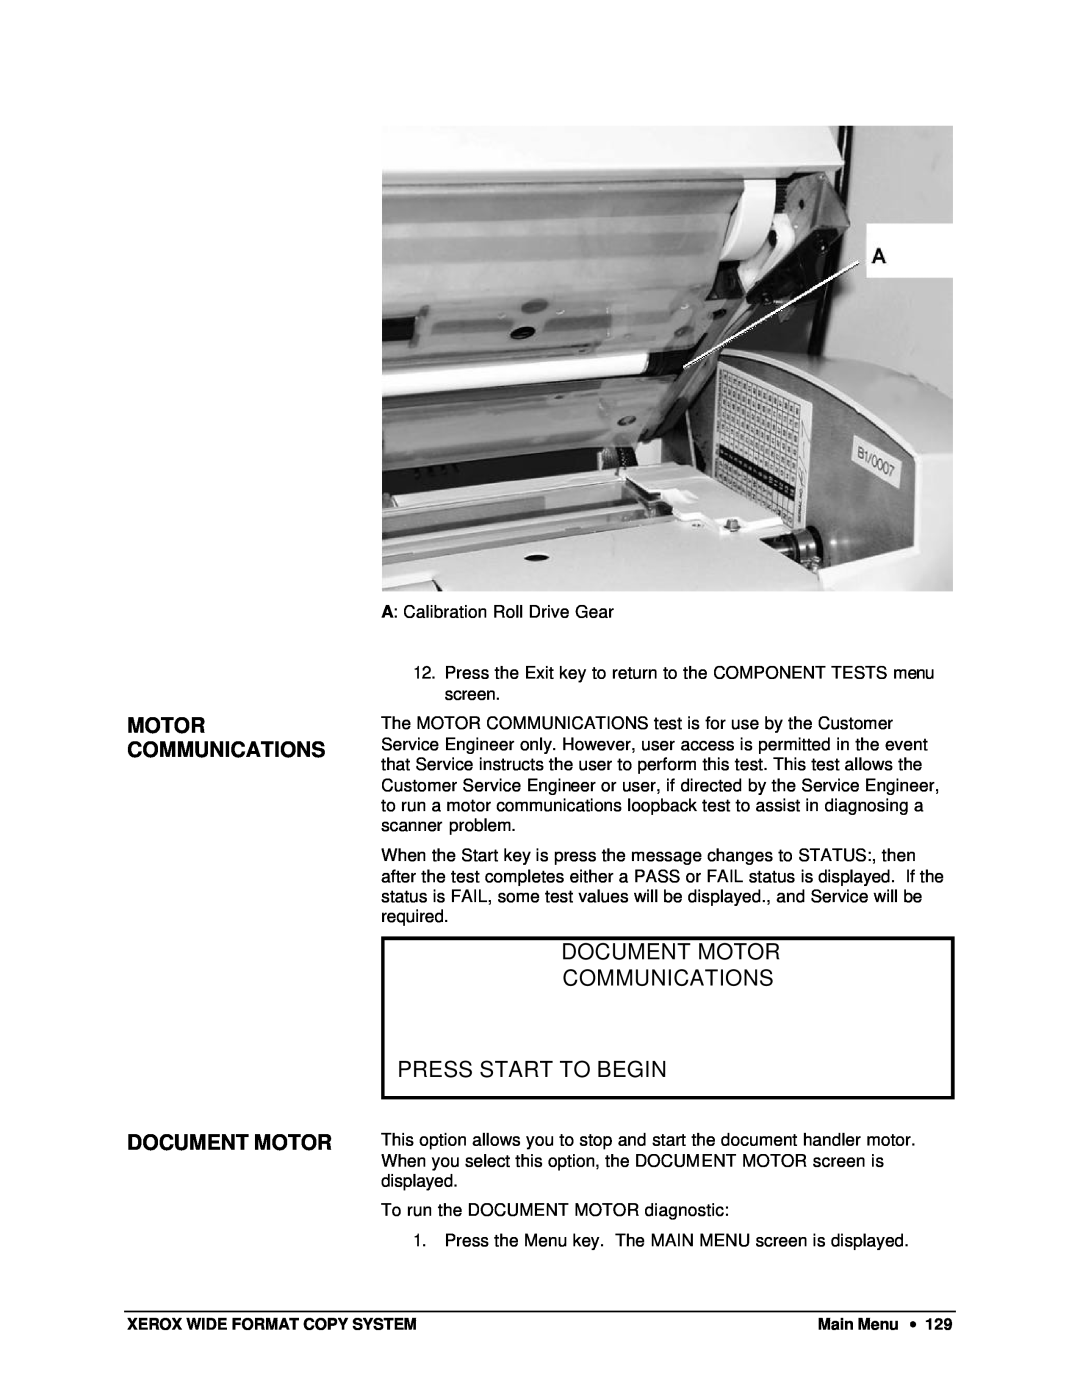 Xerox X2, 8825, 8850, 8830 manual Document Motor Communications, Press Start To Begin, Motor Communications Document Motor 